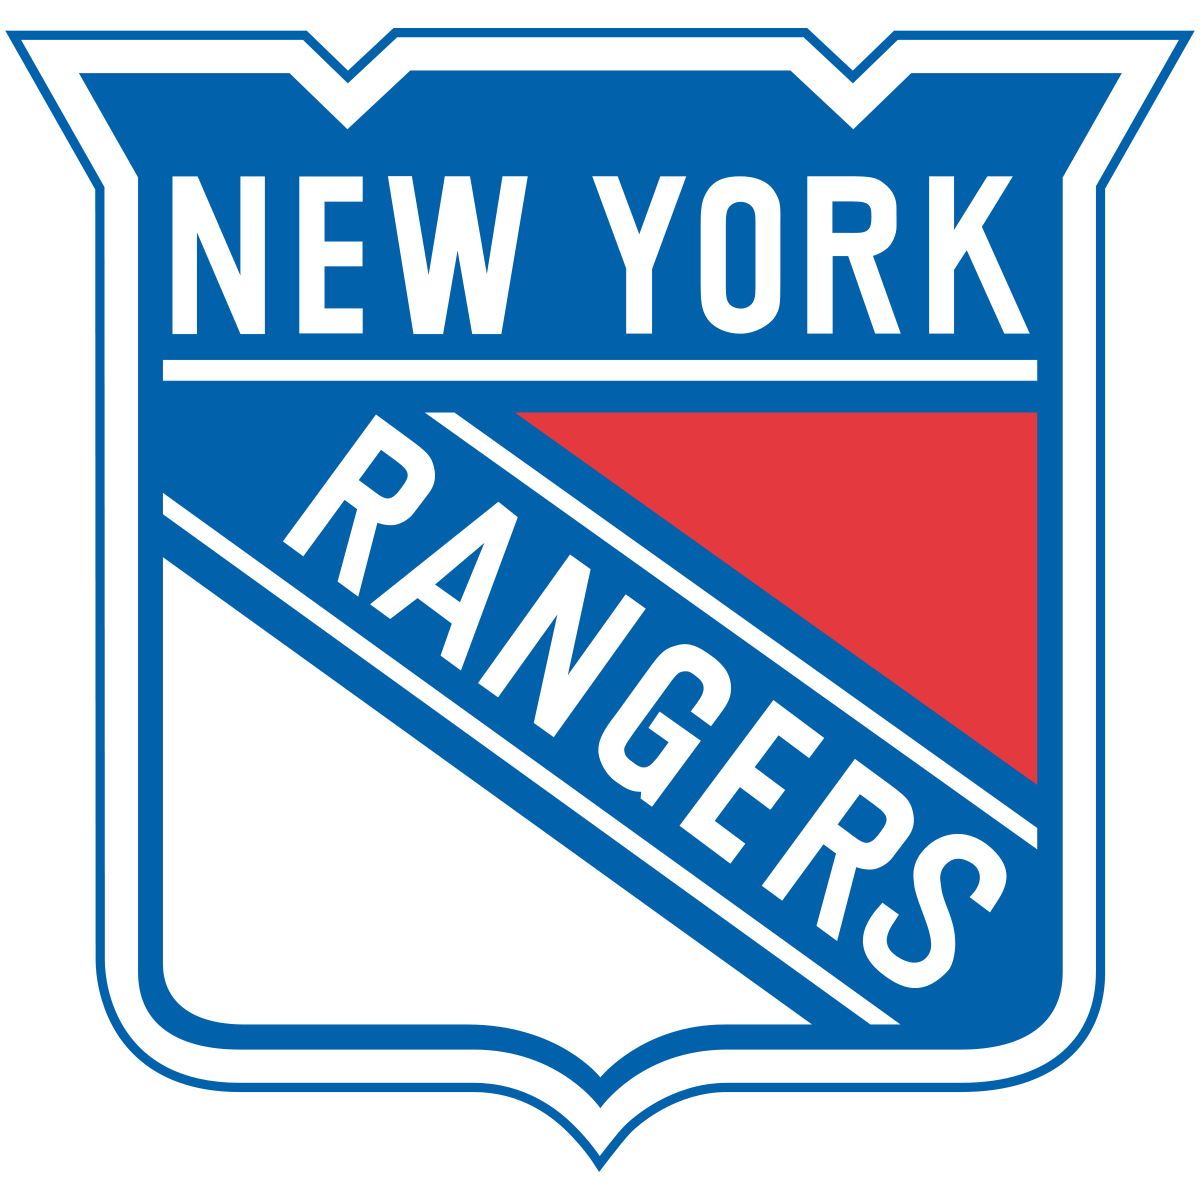 RANGERS NEW YORK equipe hockey nhl